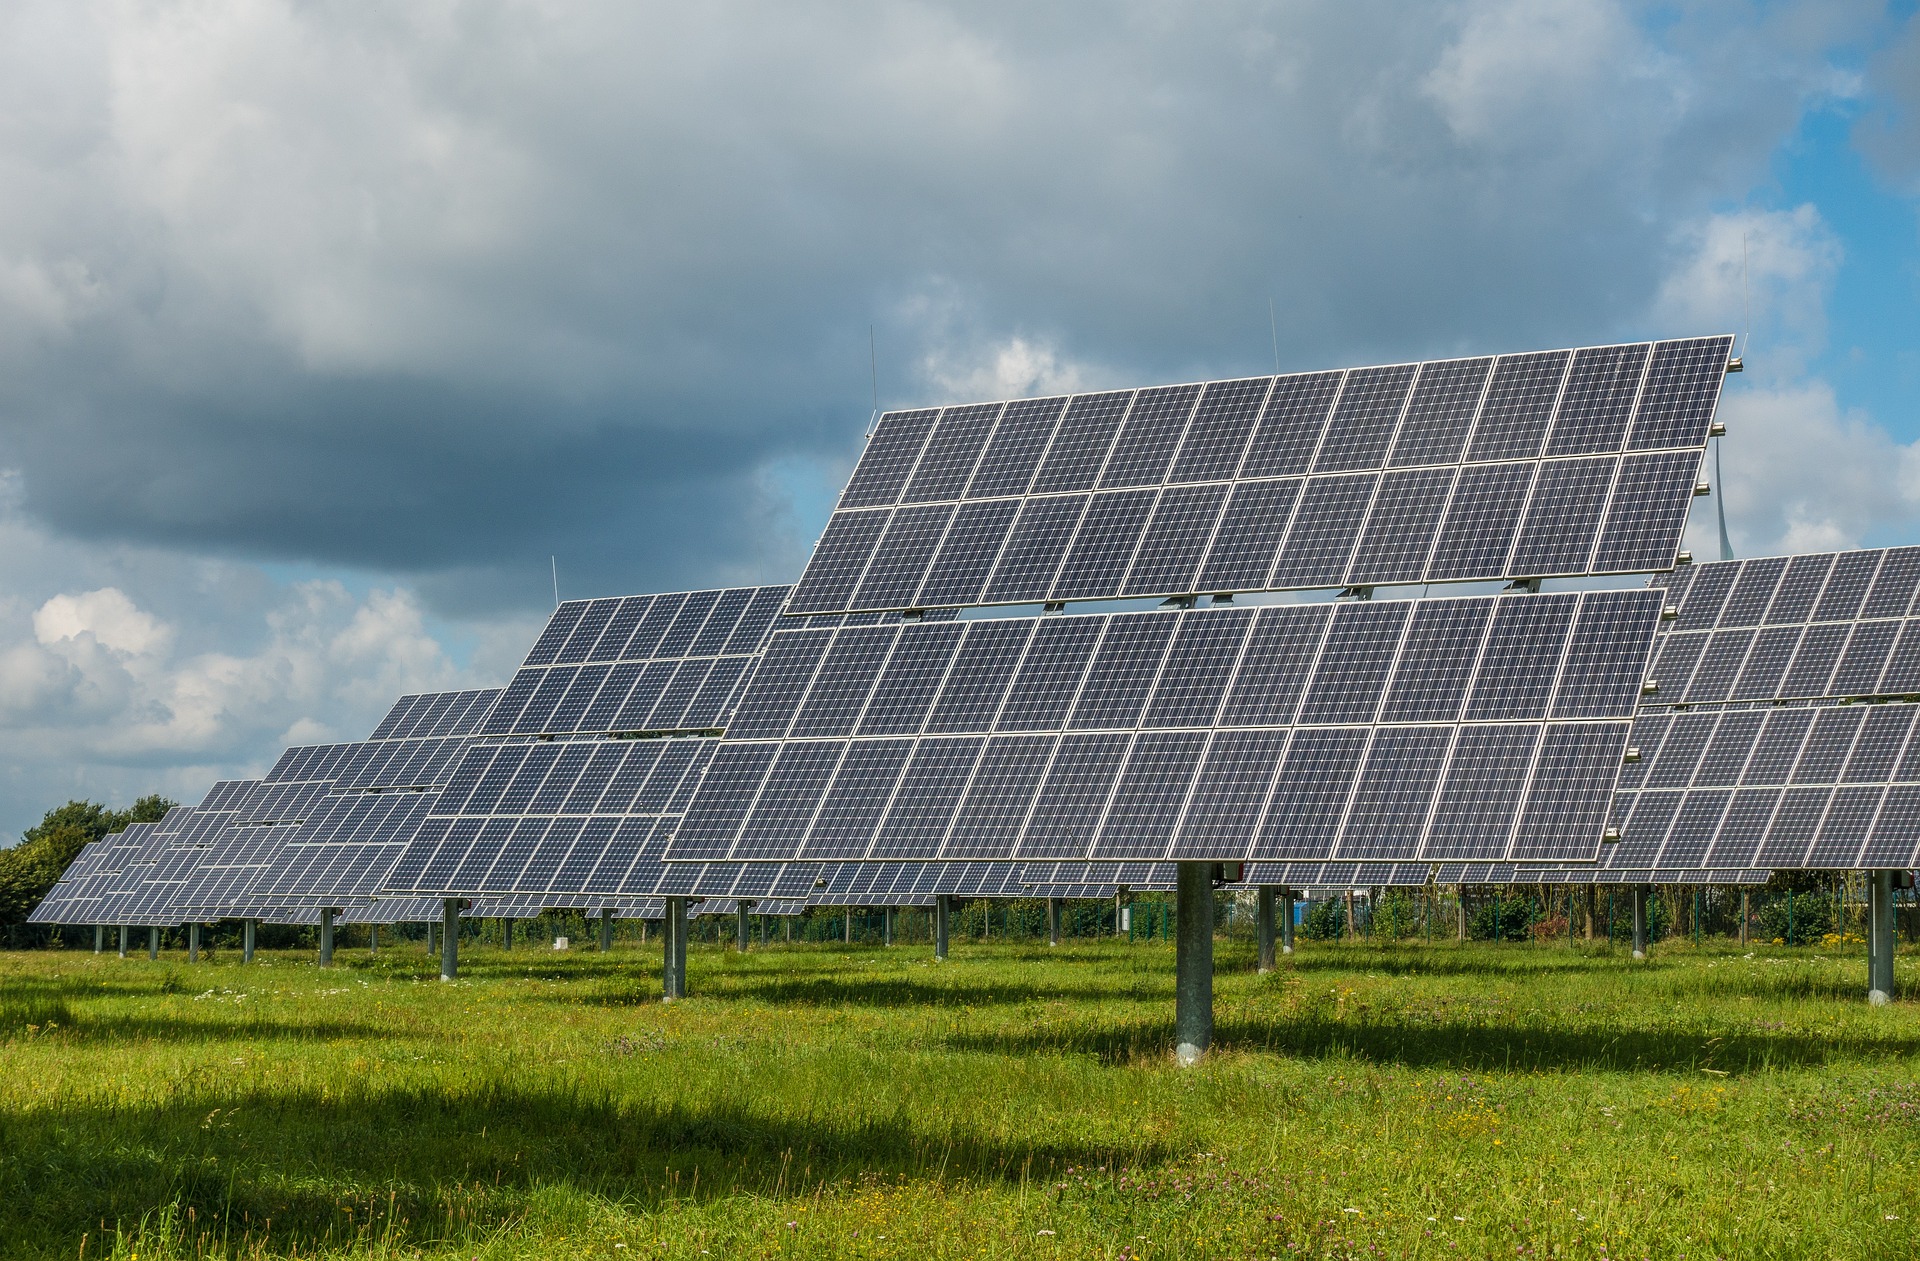 Industrial Solar Power Plants Set New Record